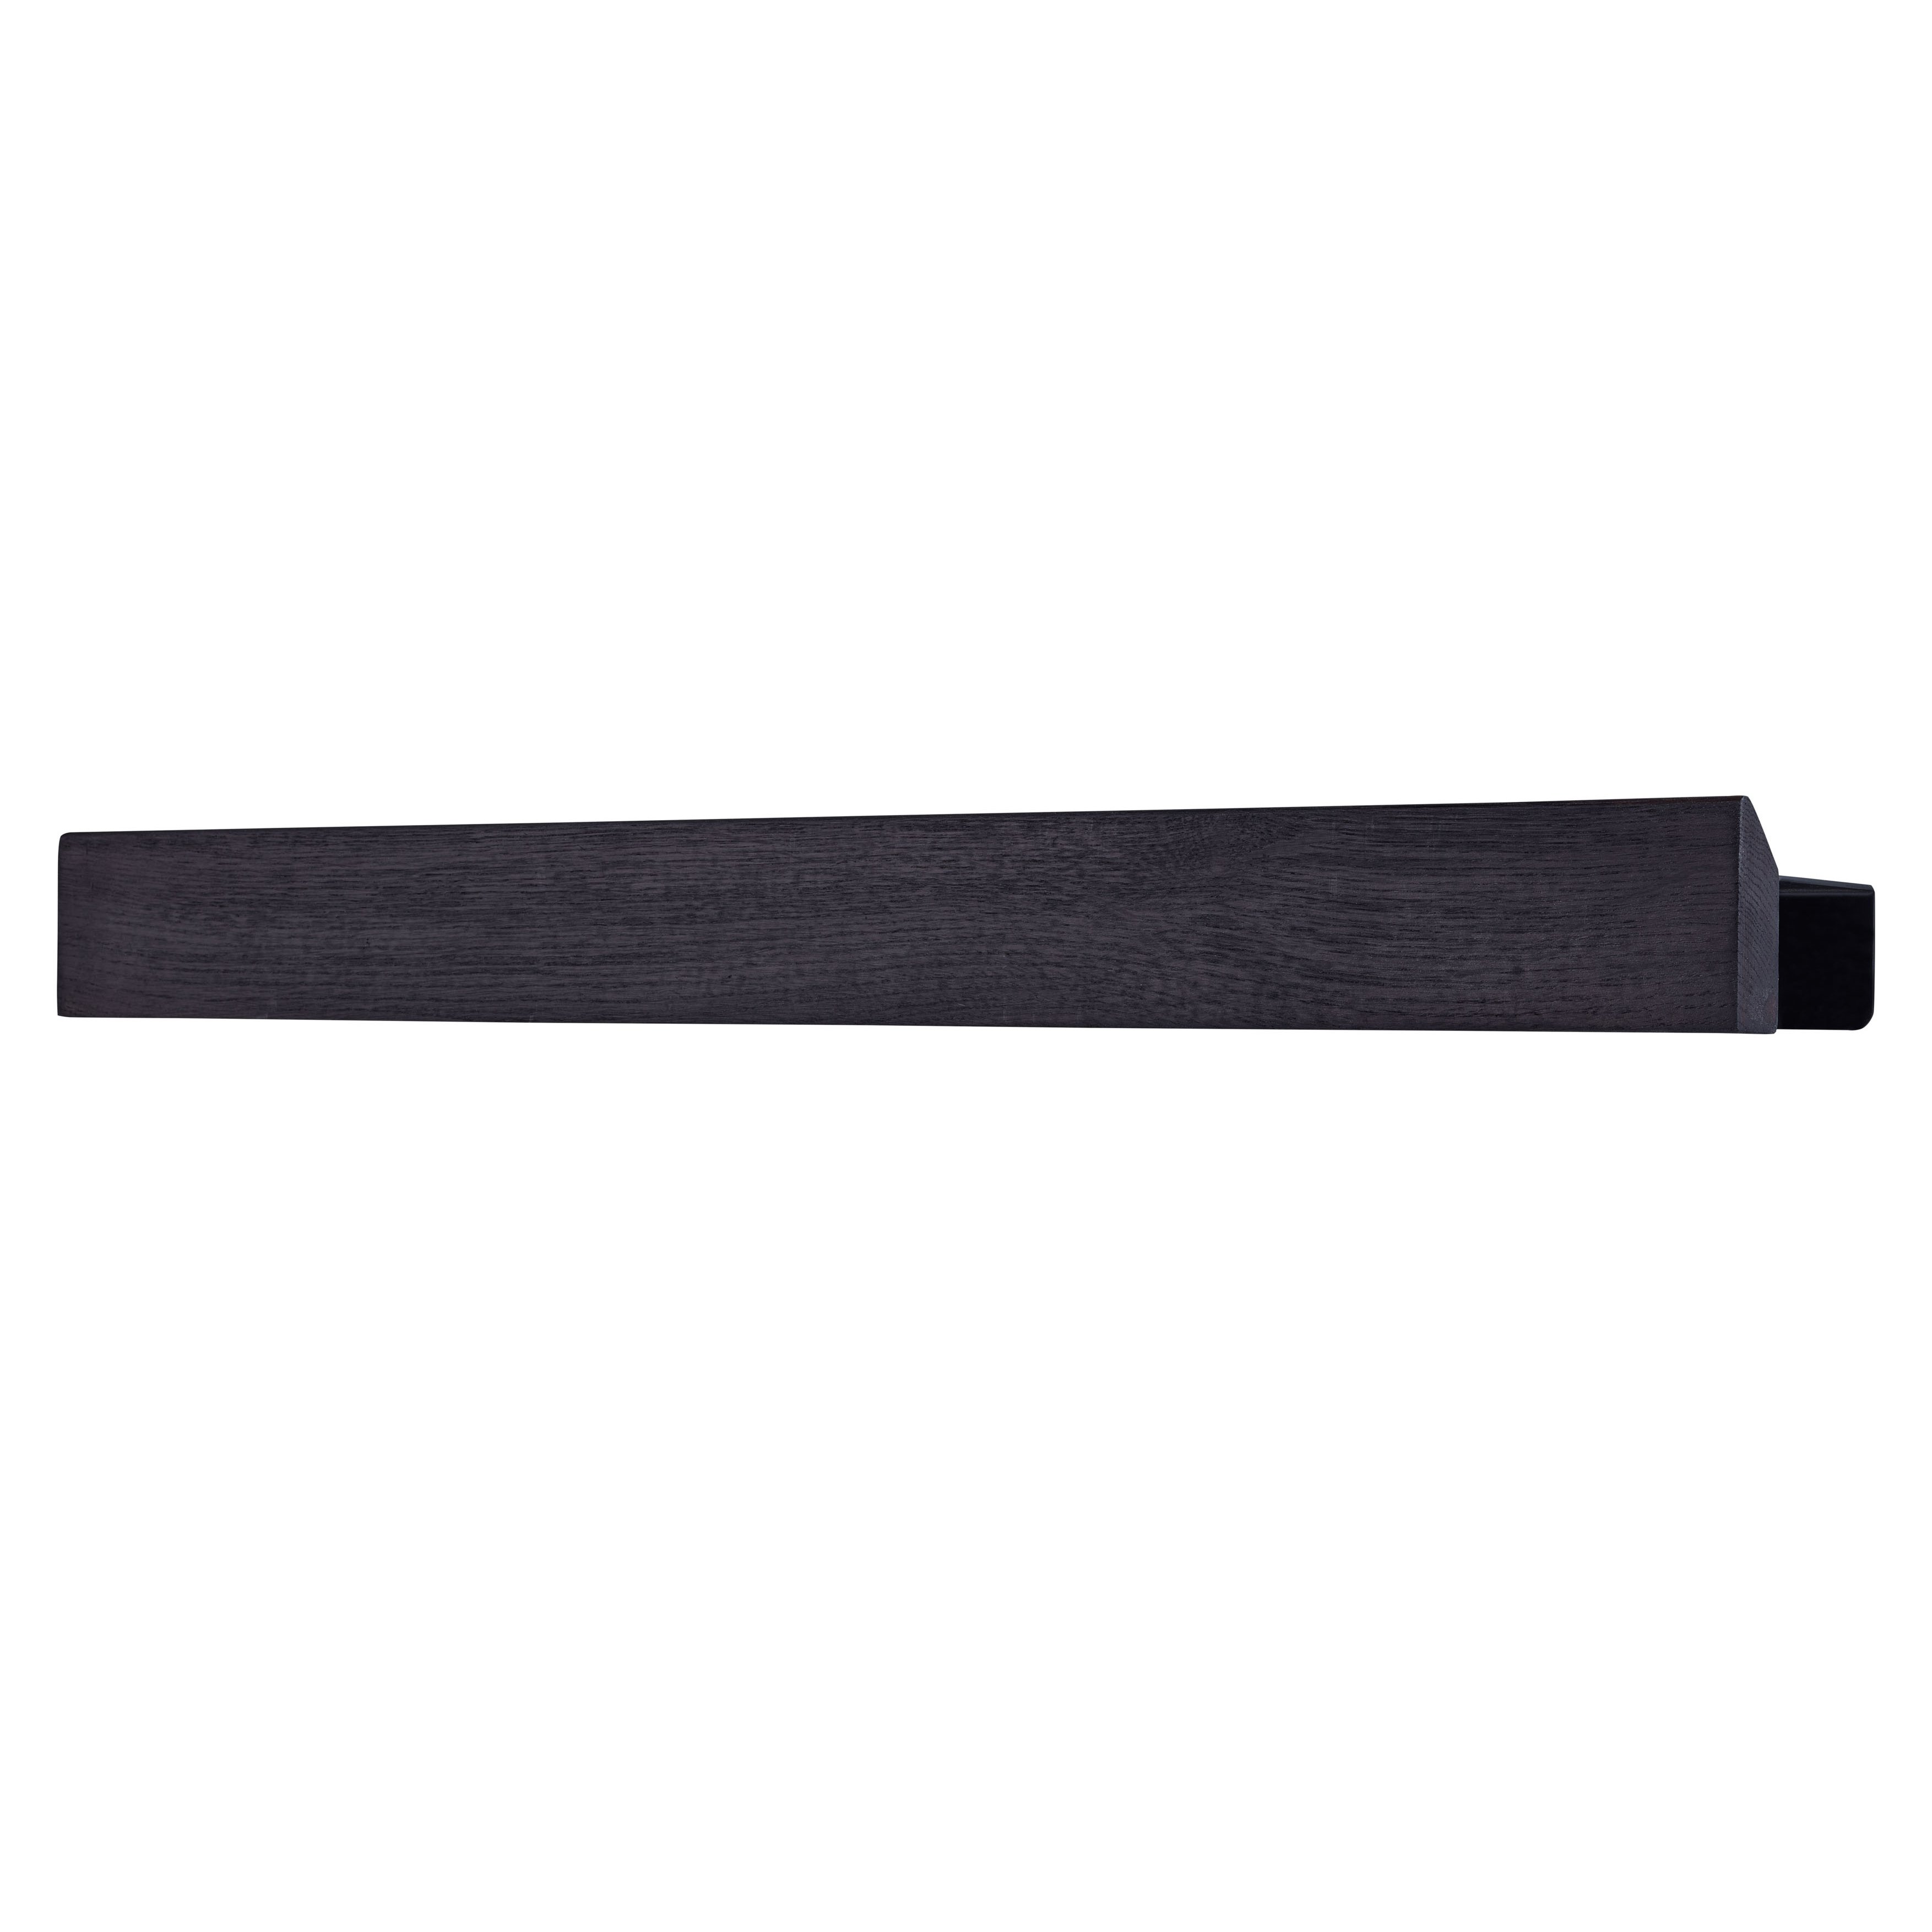 Gejst - Flex Rail 60 cm - Black/Black (00426)